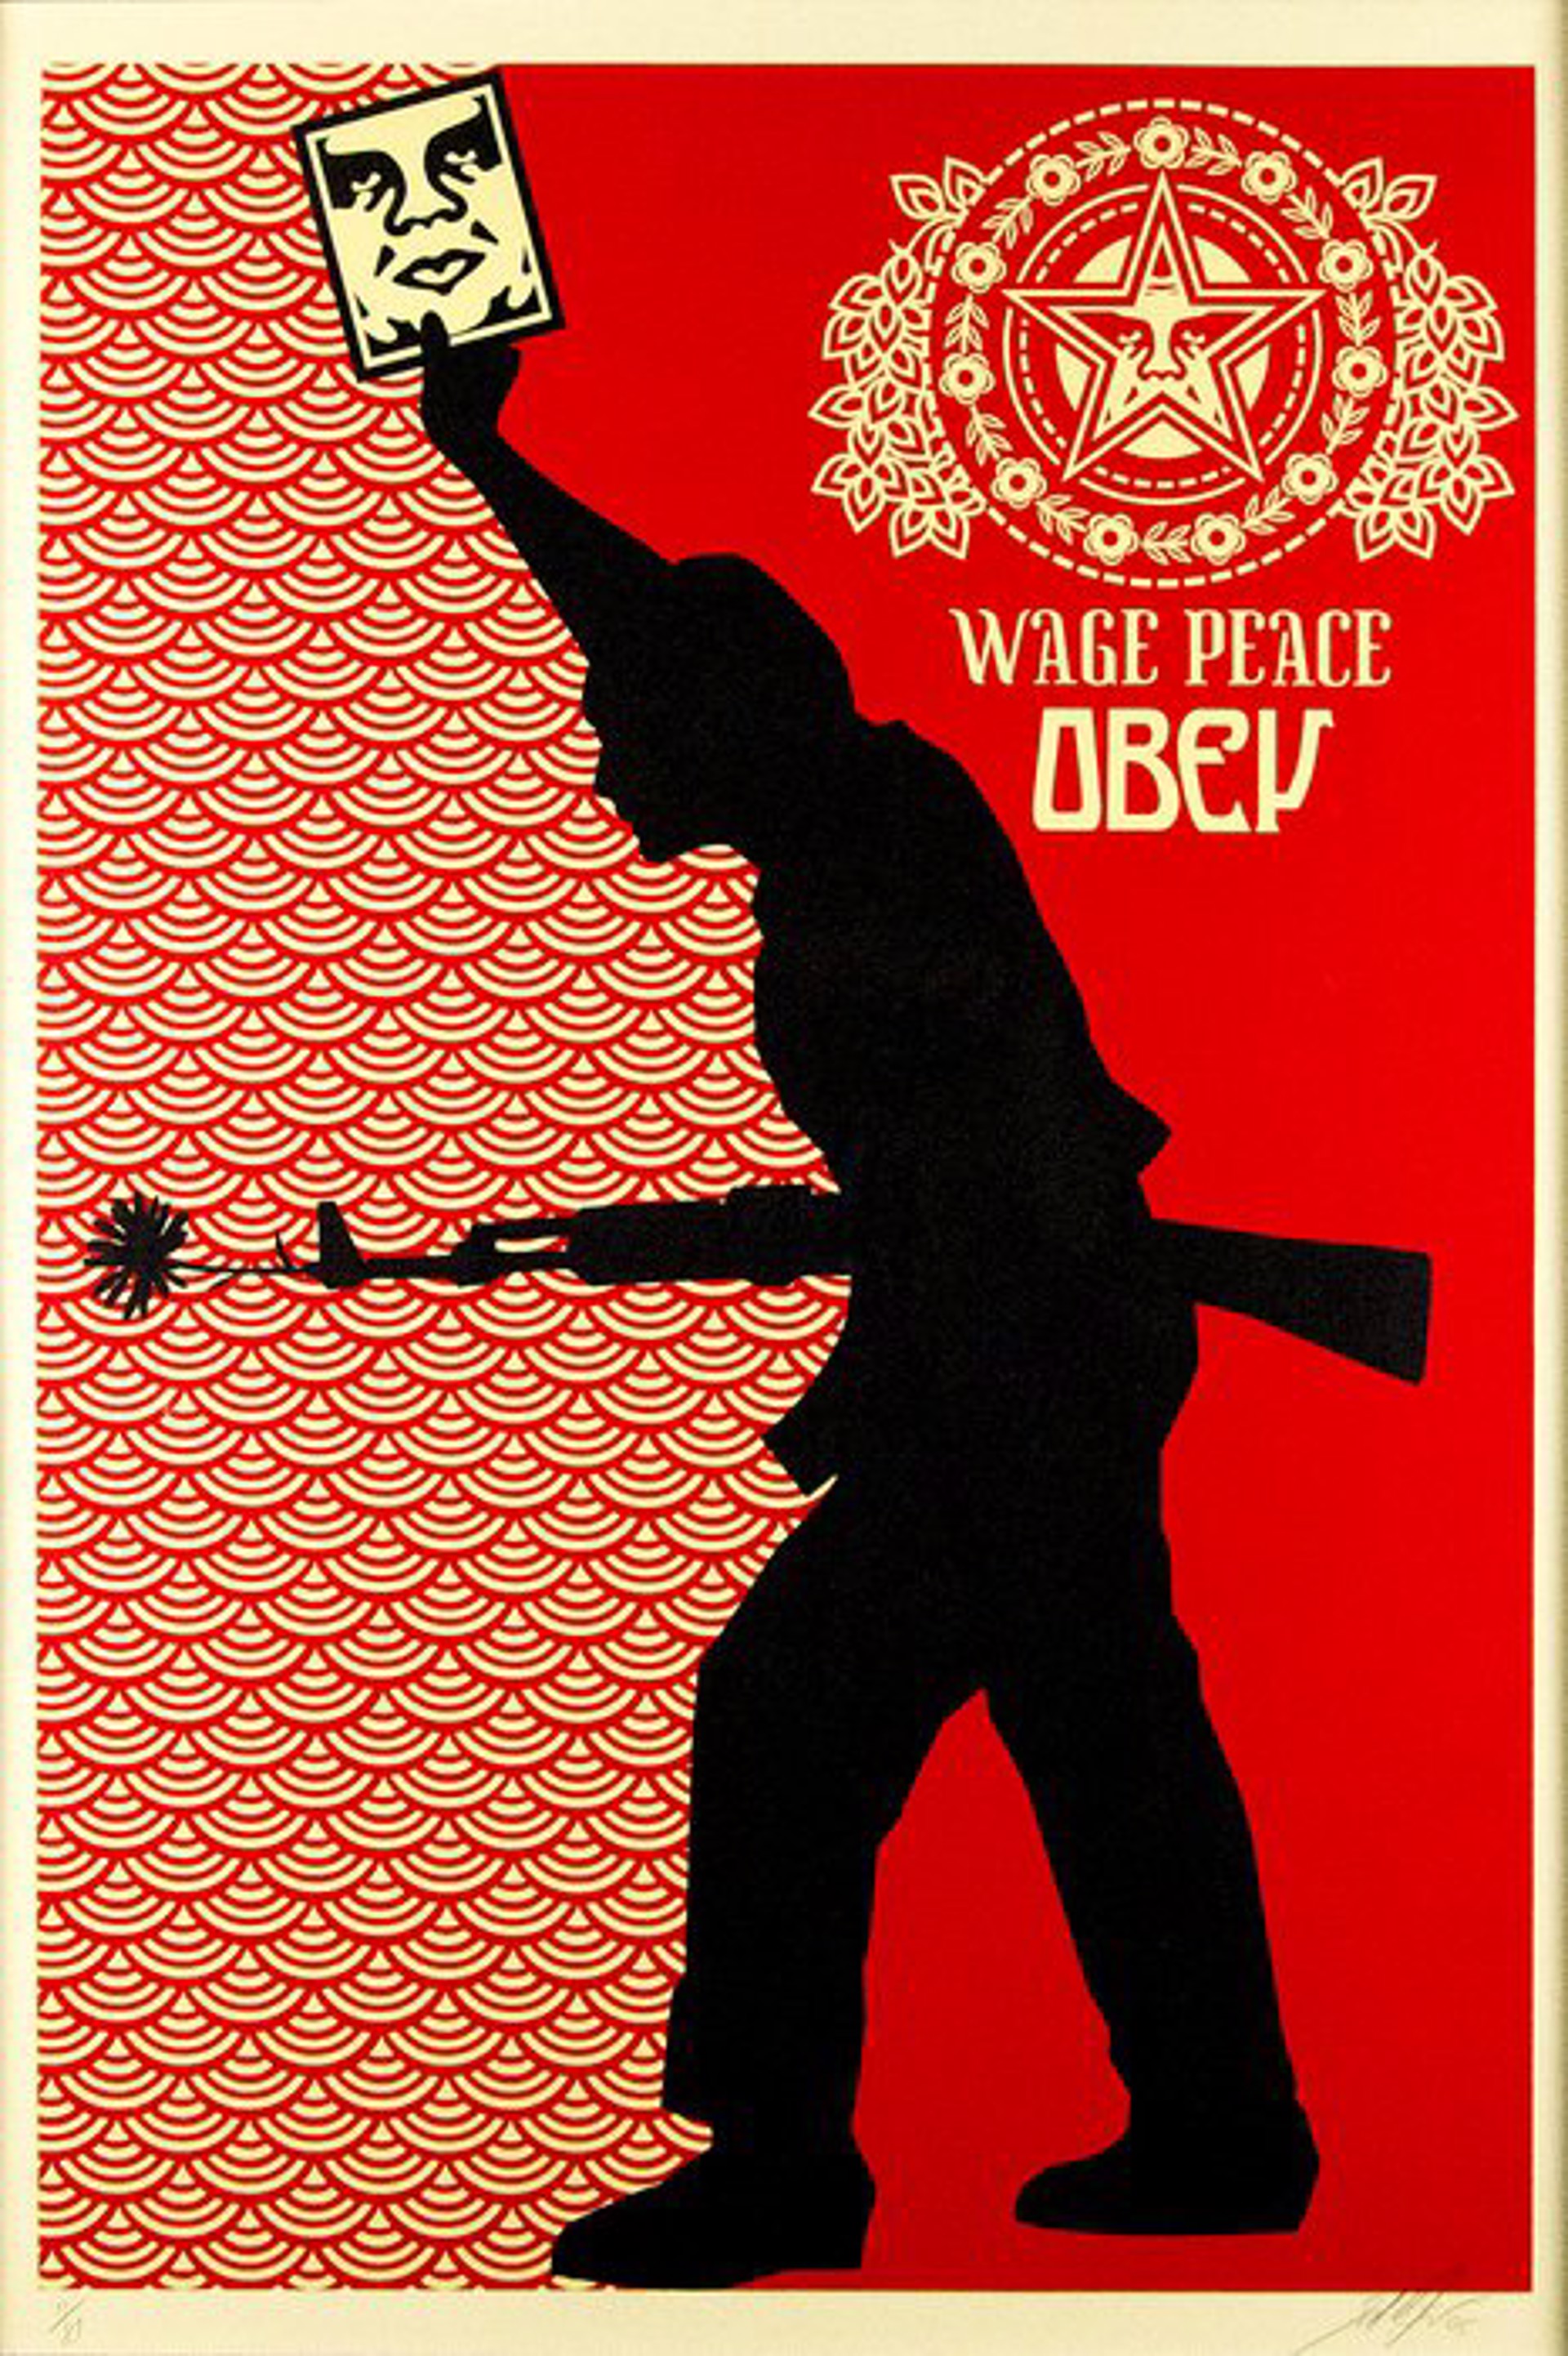 Obey Wage Peace by Shepard Fairey